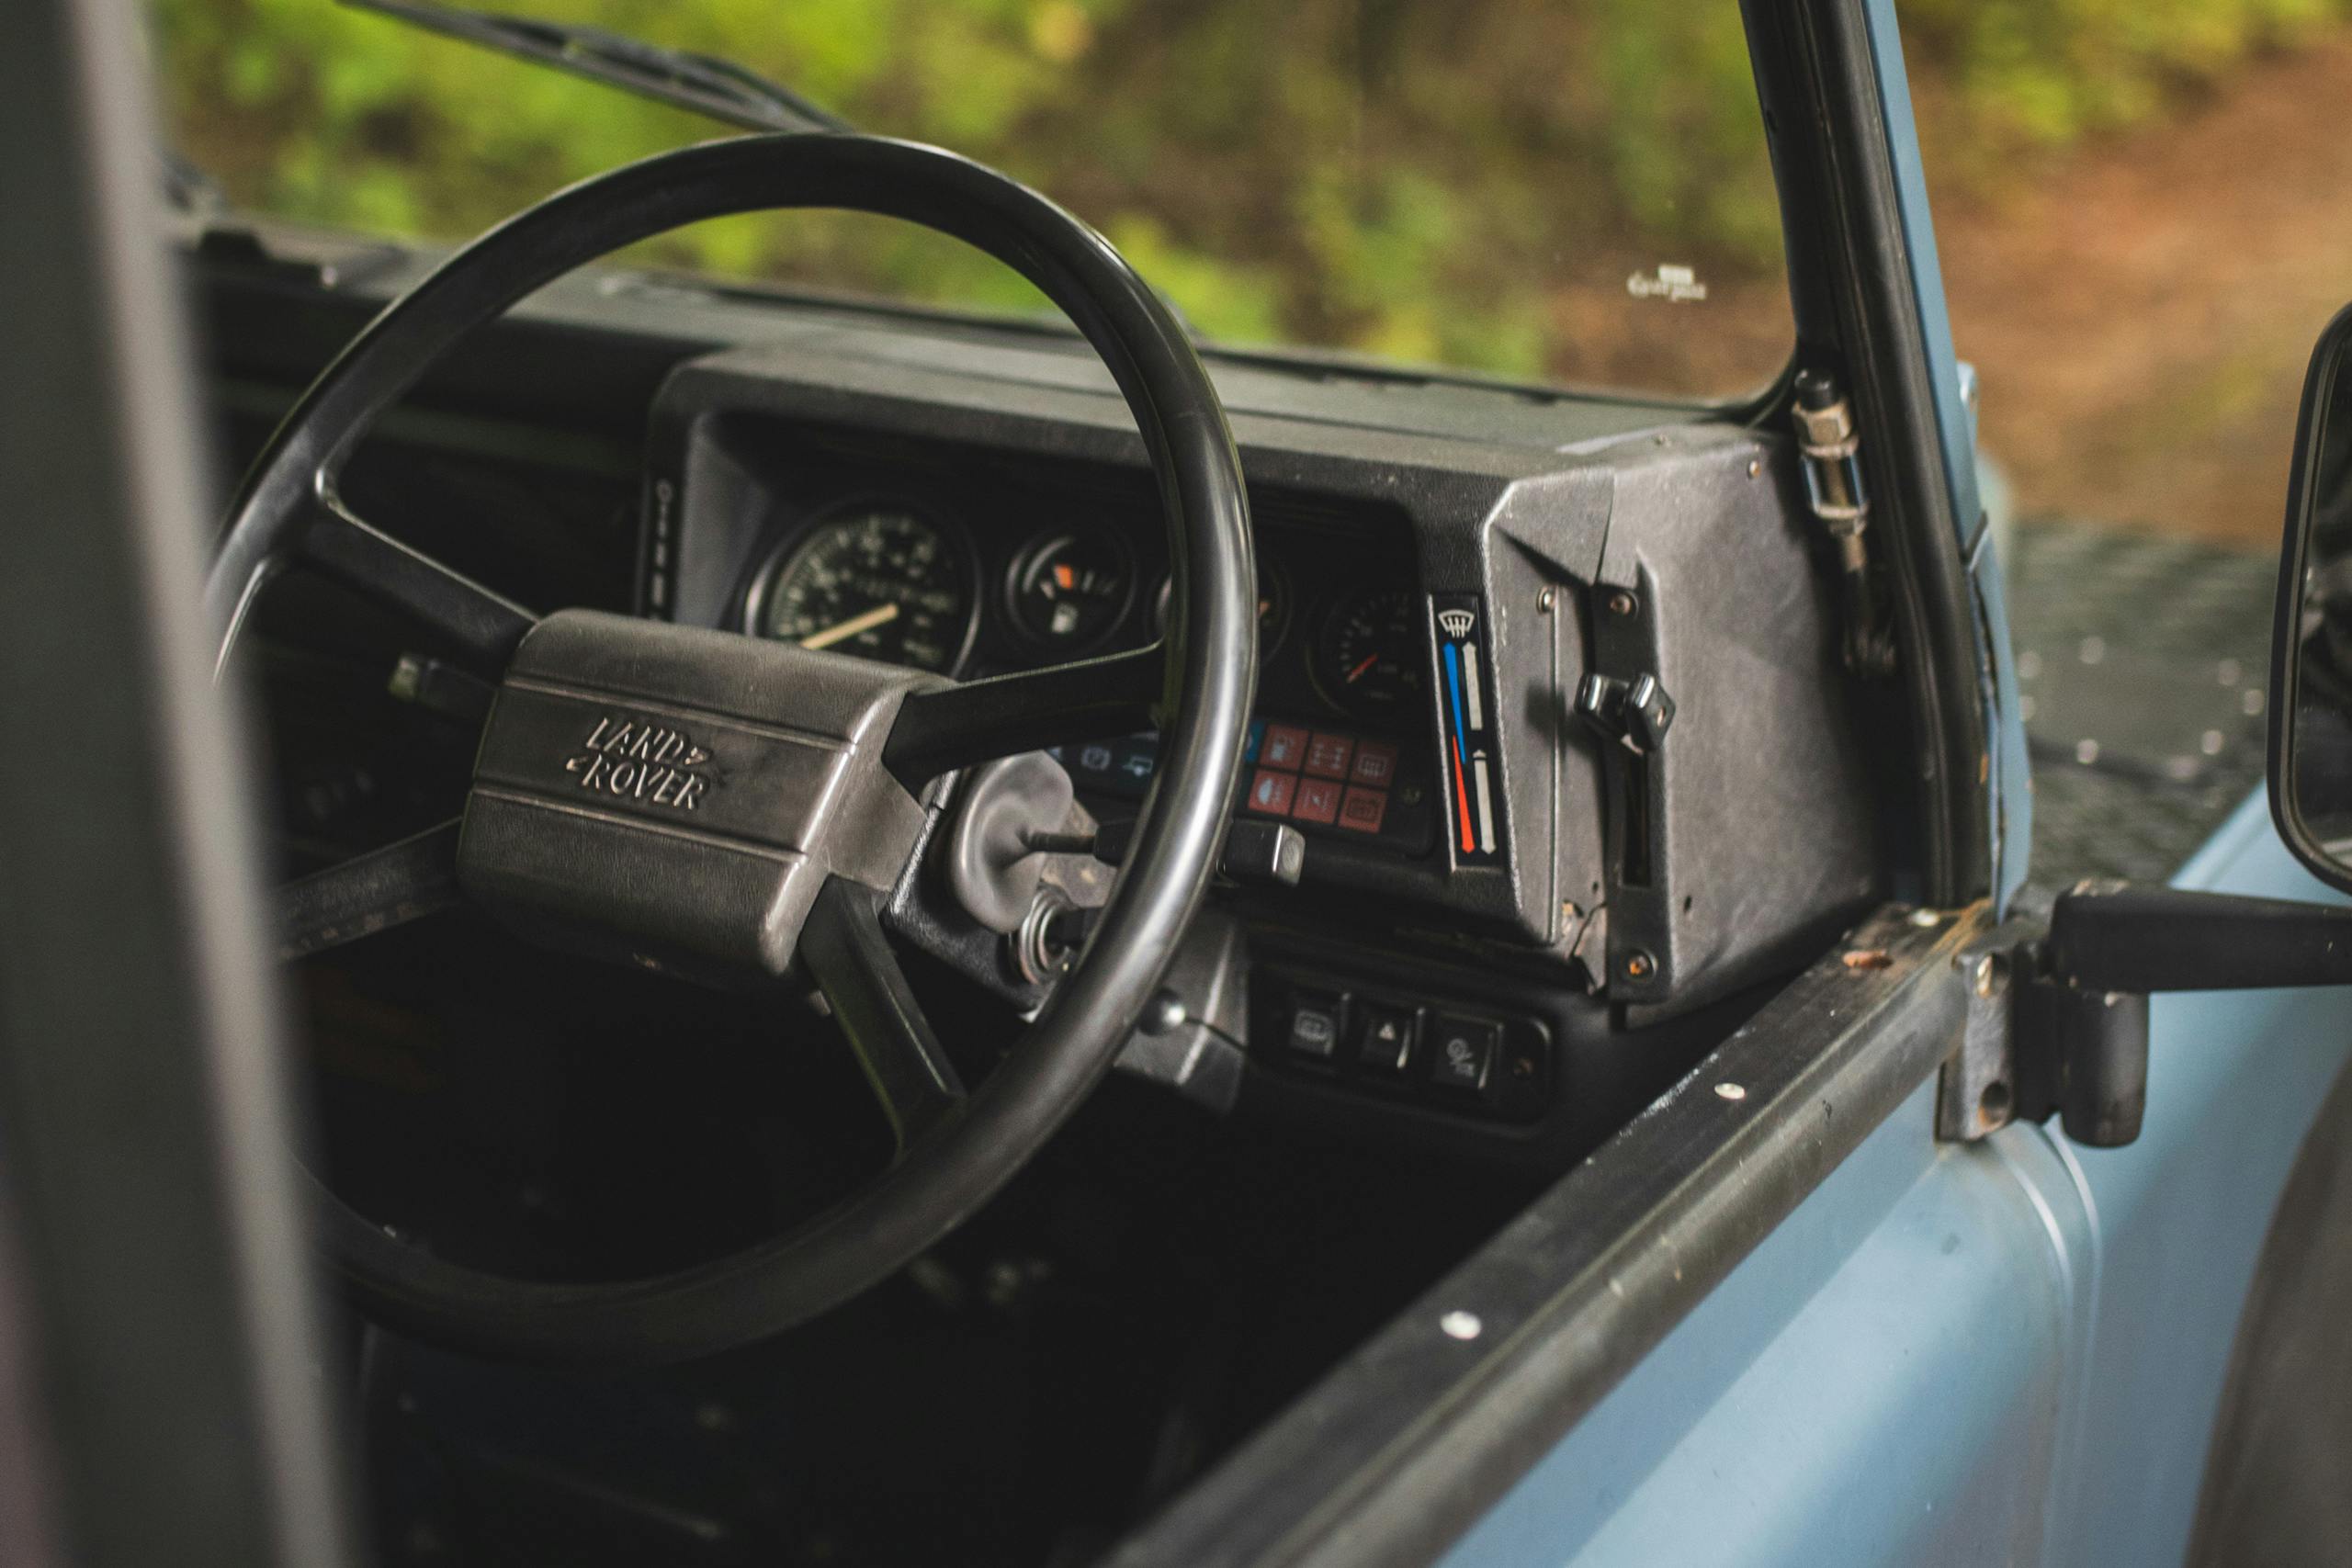 1992 Land Rover Defender interior steering wheel